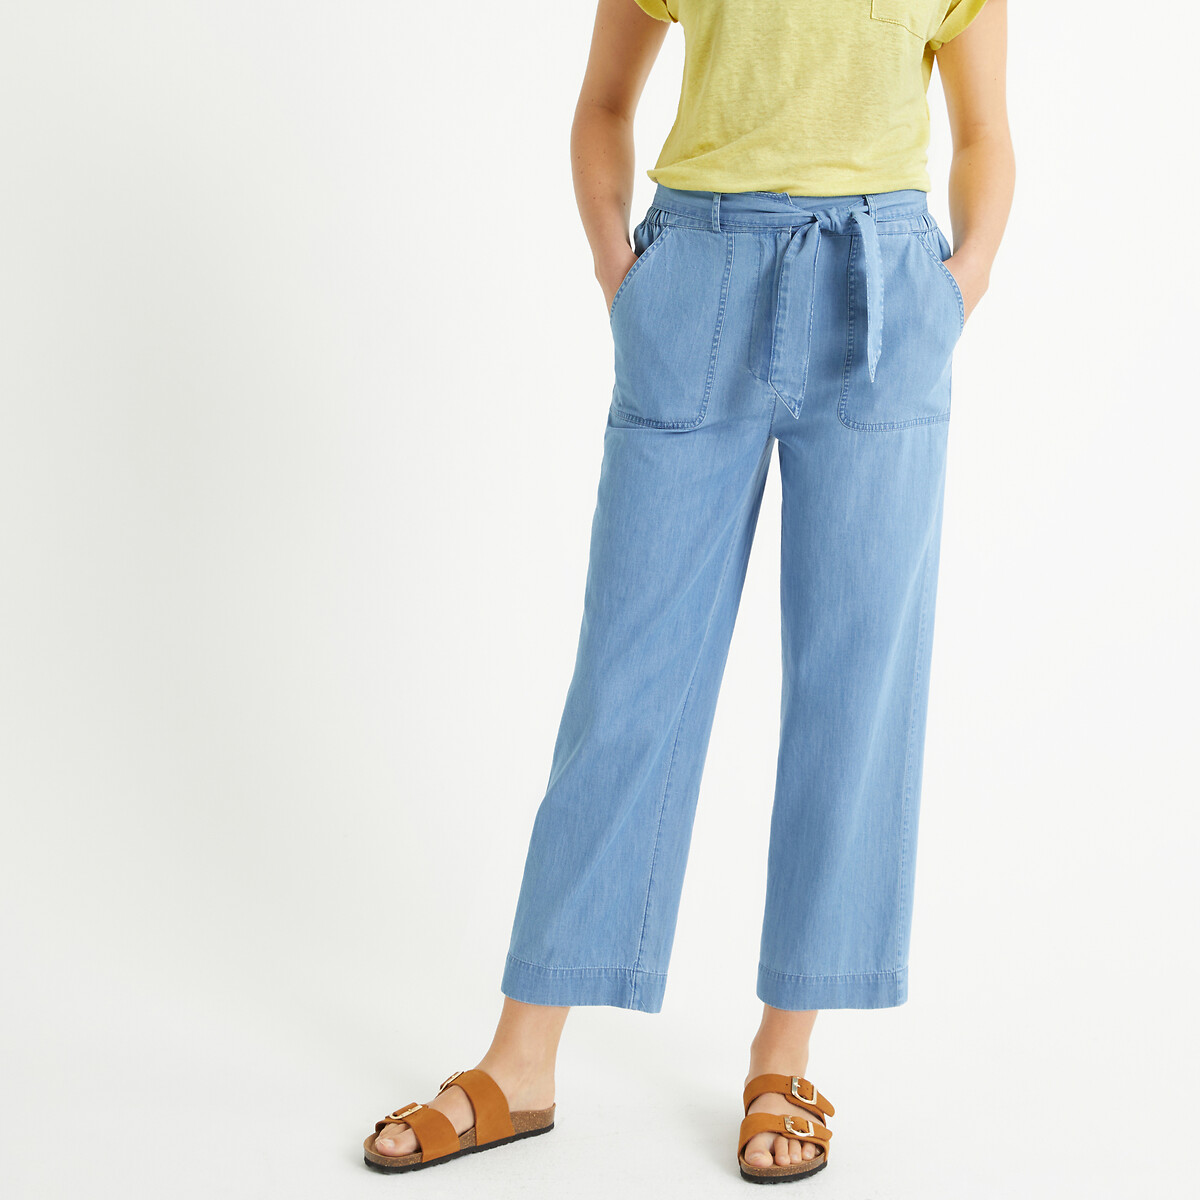 Wide Leg Jeans in Lightweight Denim, Length 25"